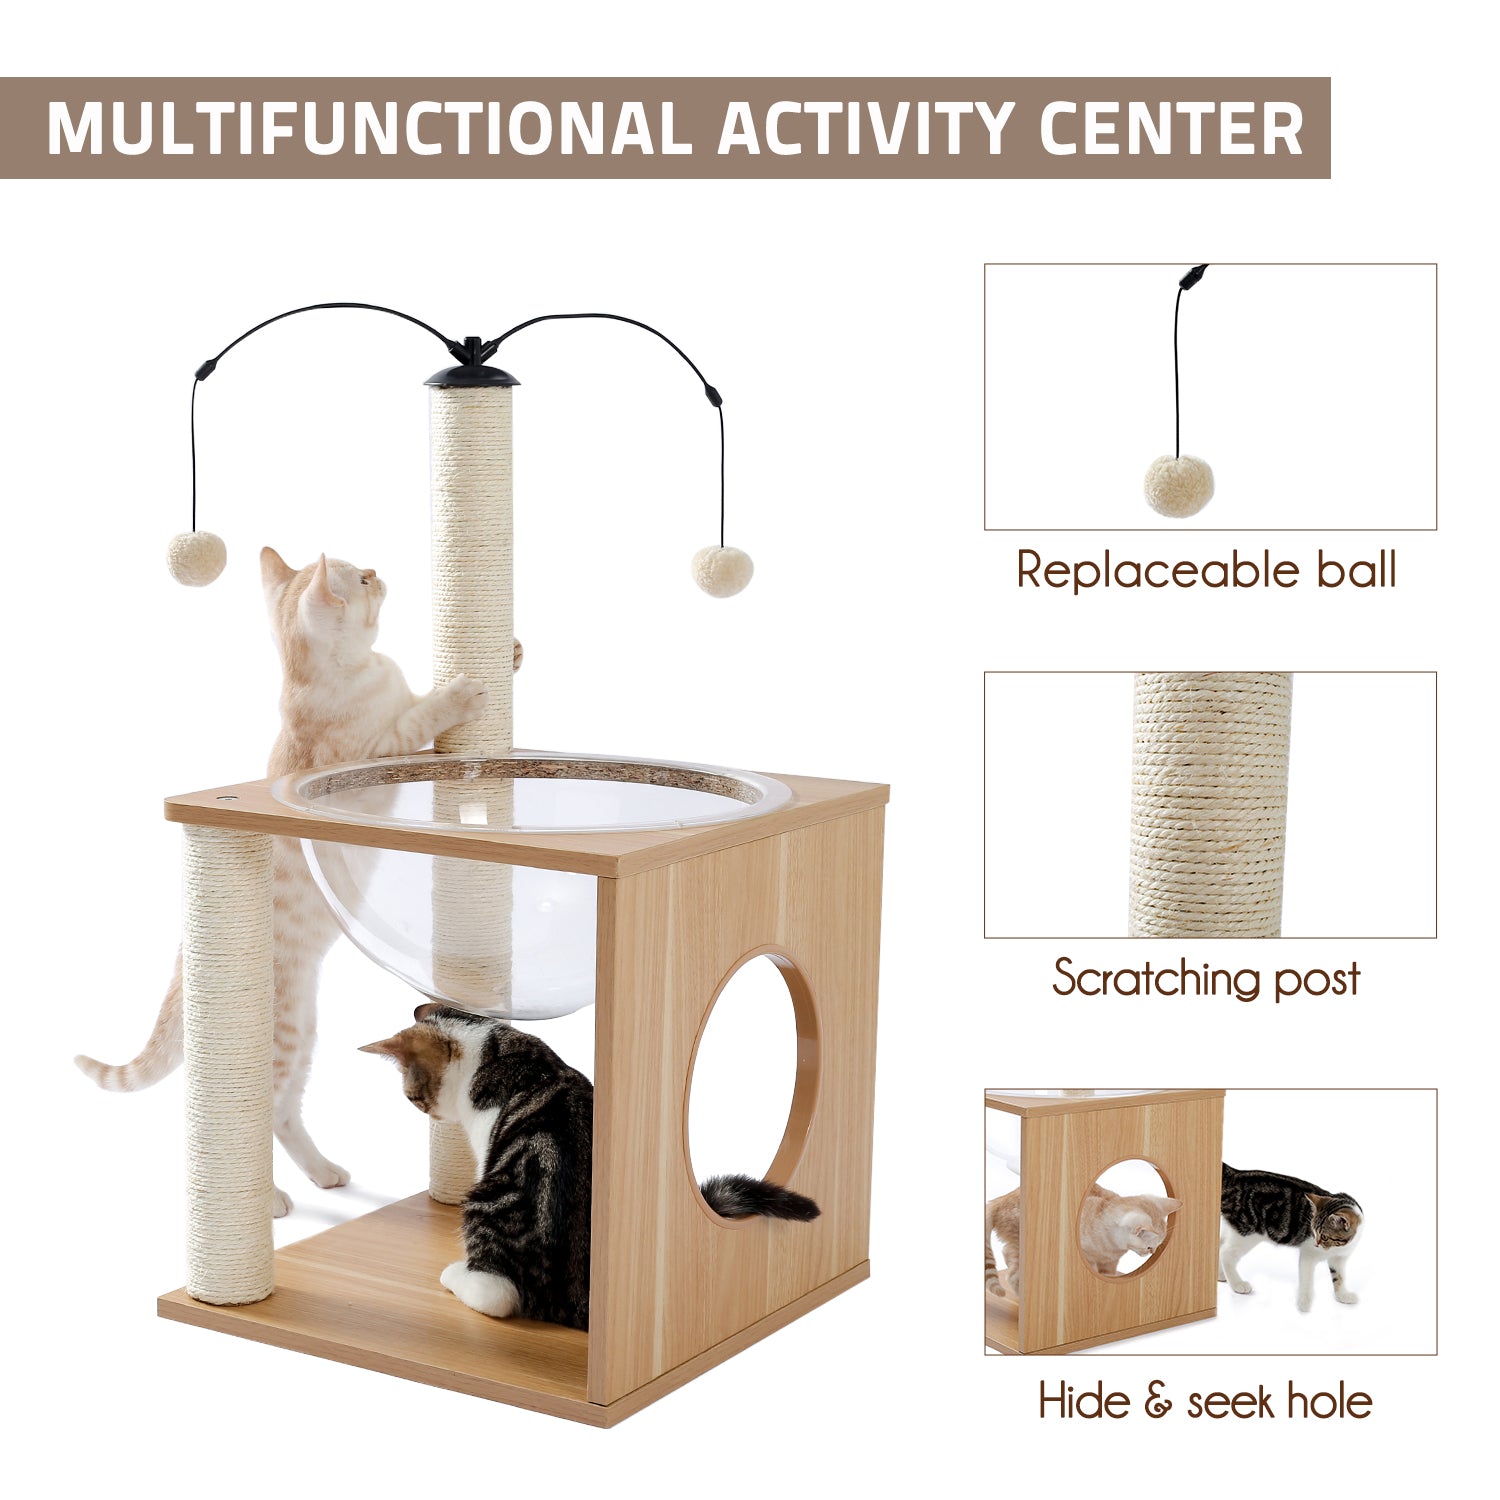 Cat Furniture Cat Tree Cat Tower with Sisal Scratching Posts Hammock Perch Cat Bed Platform Dangling Ball Beige